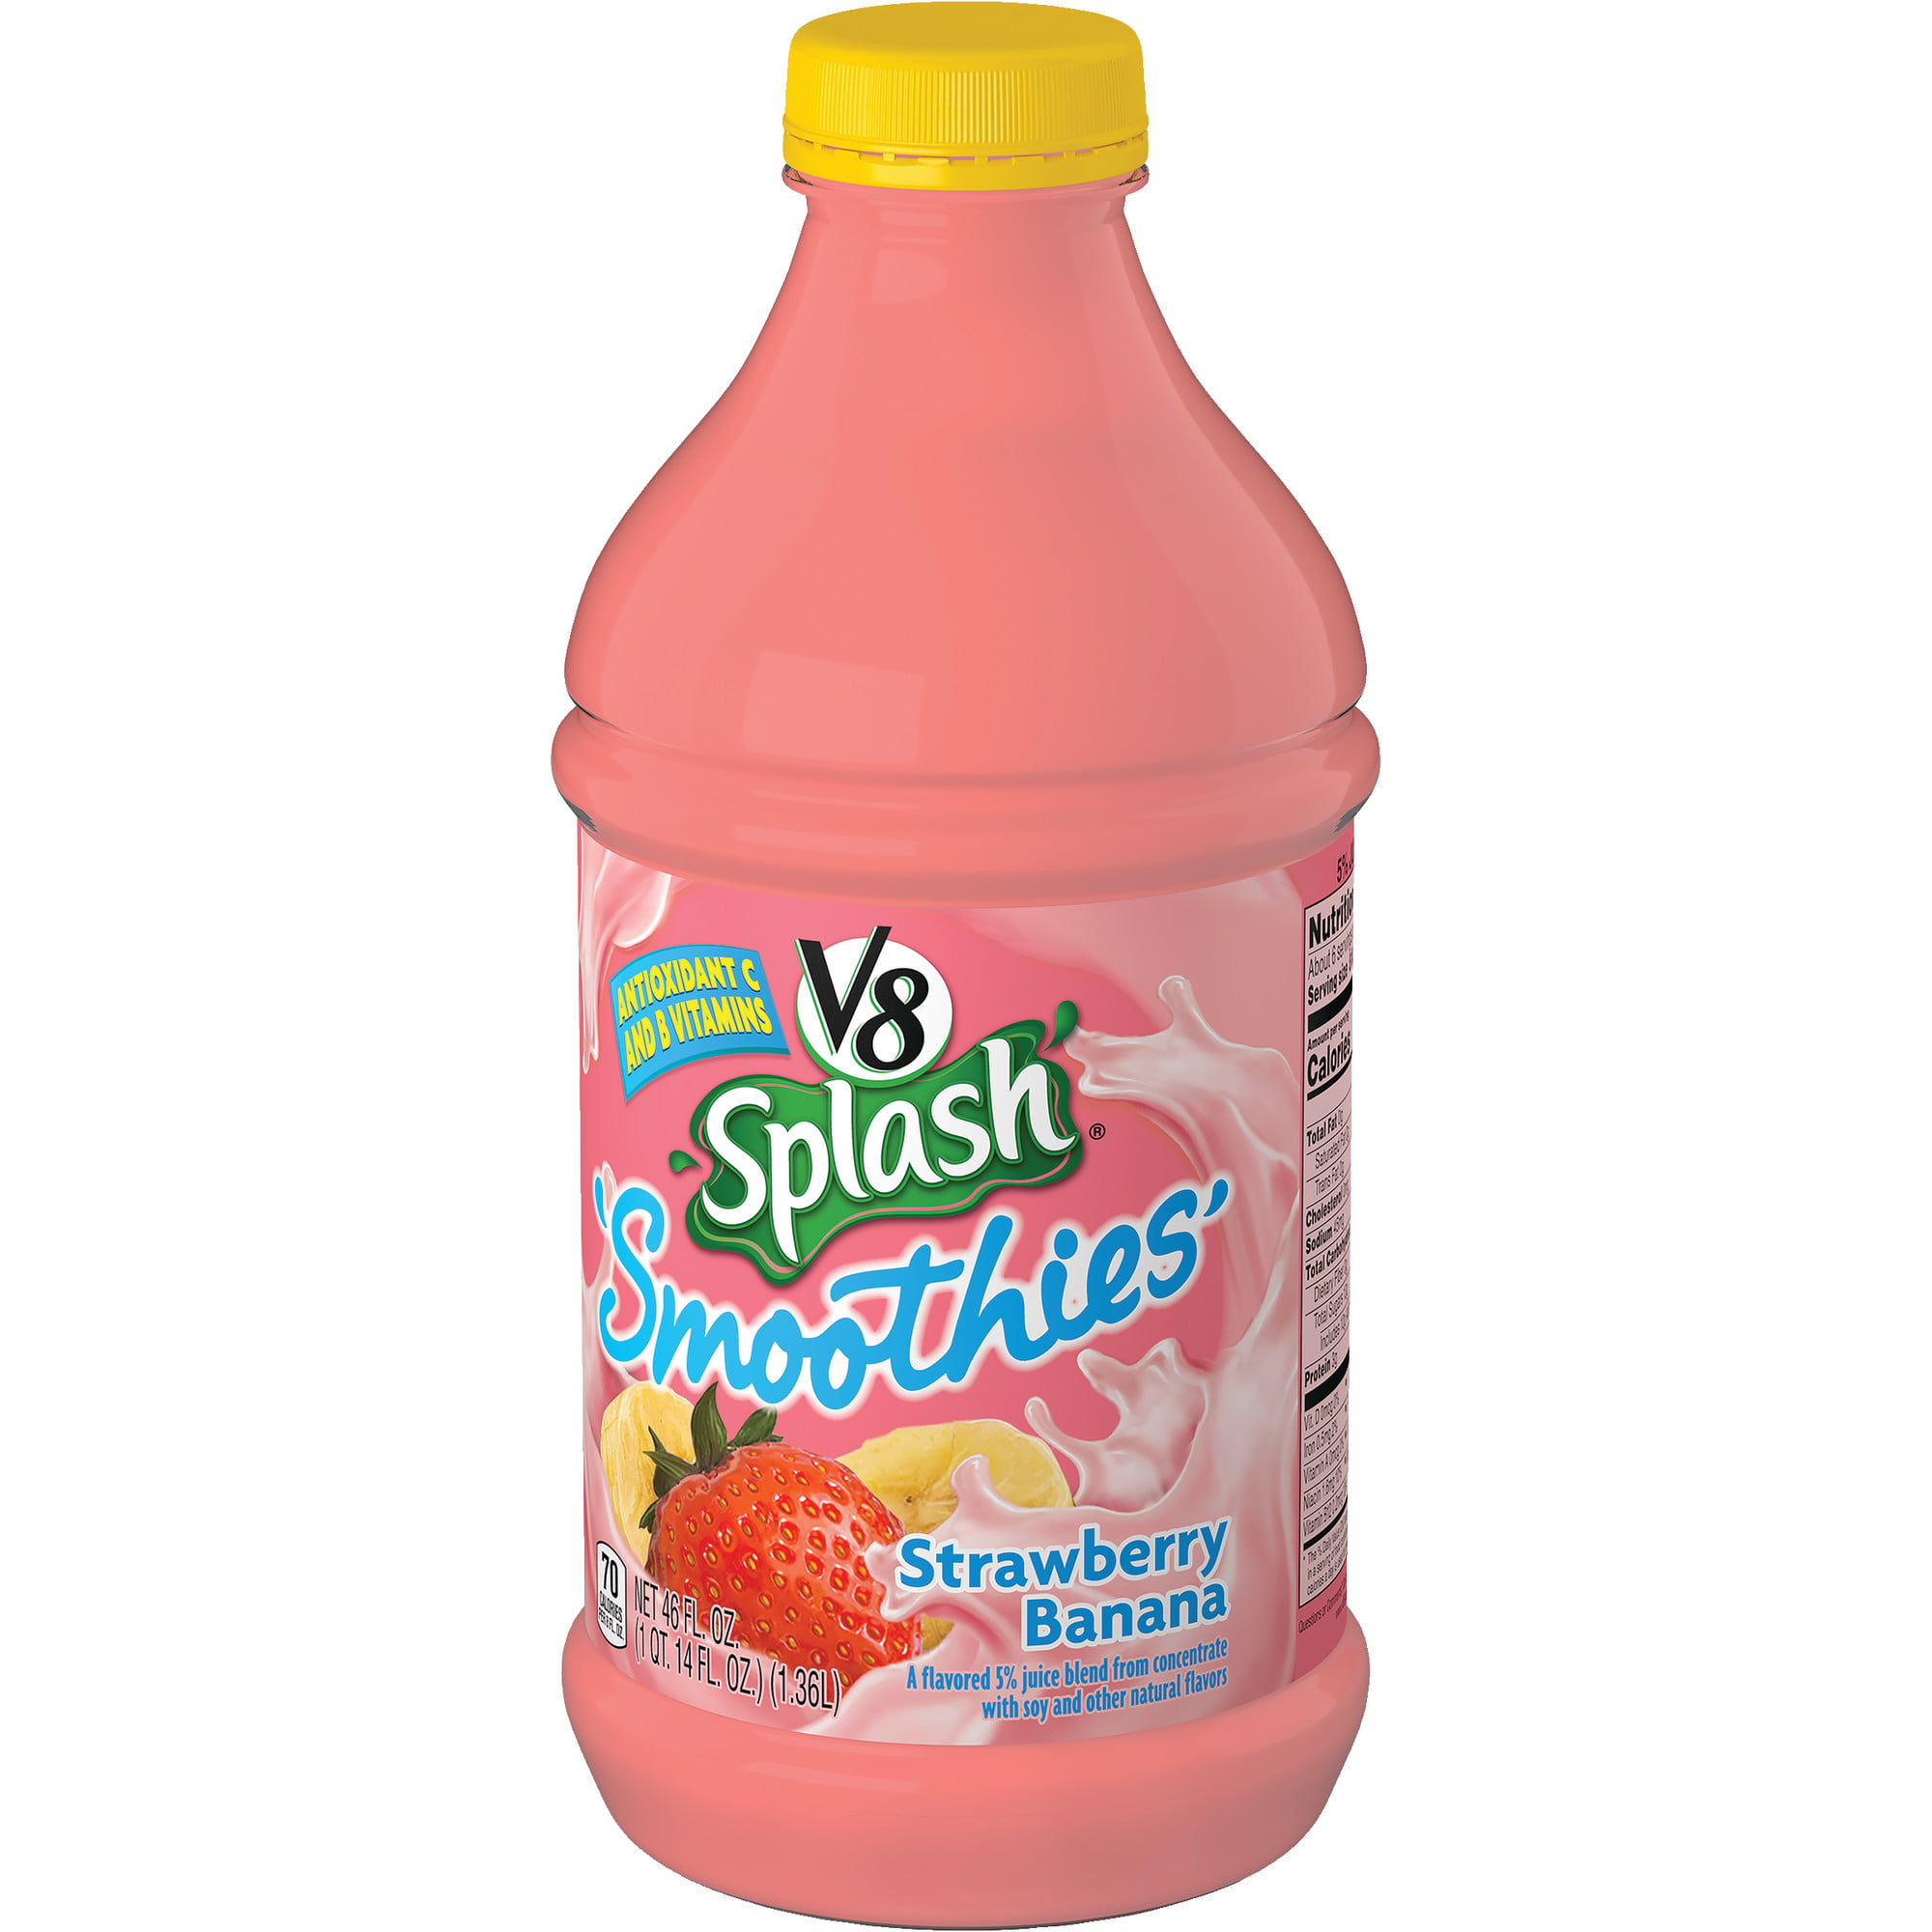 Strawberry Smoothie - Refreshments